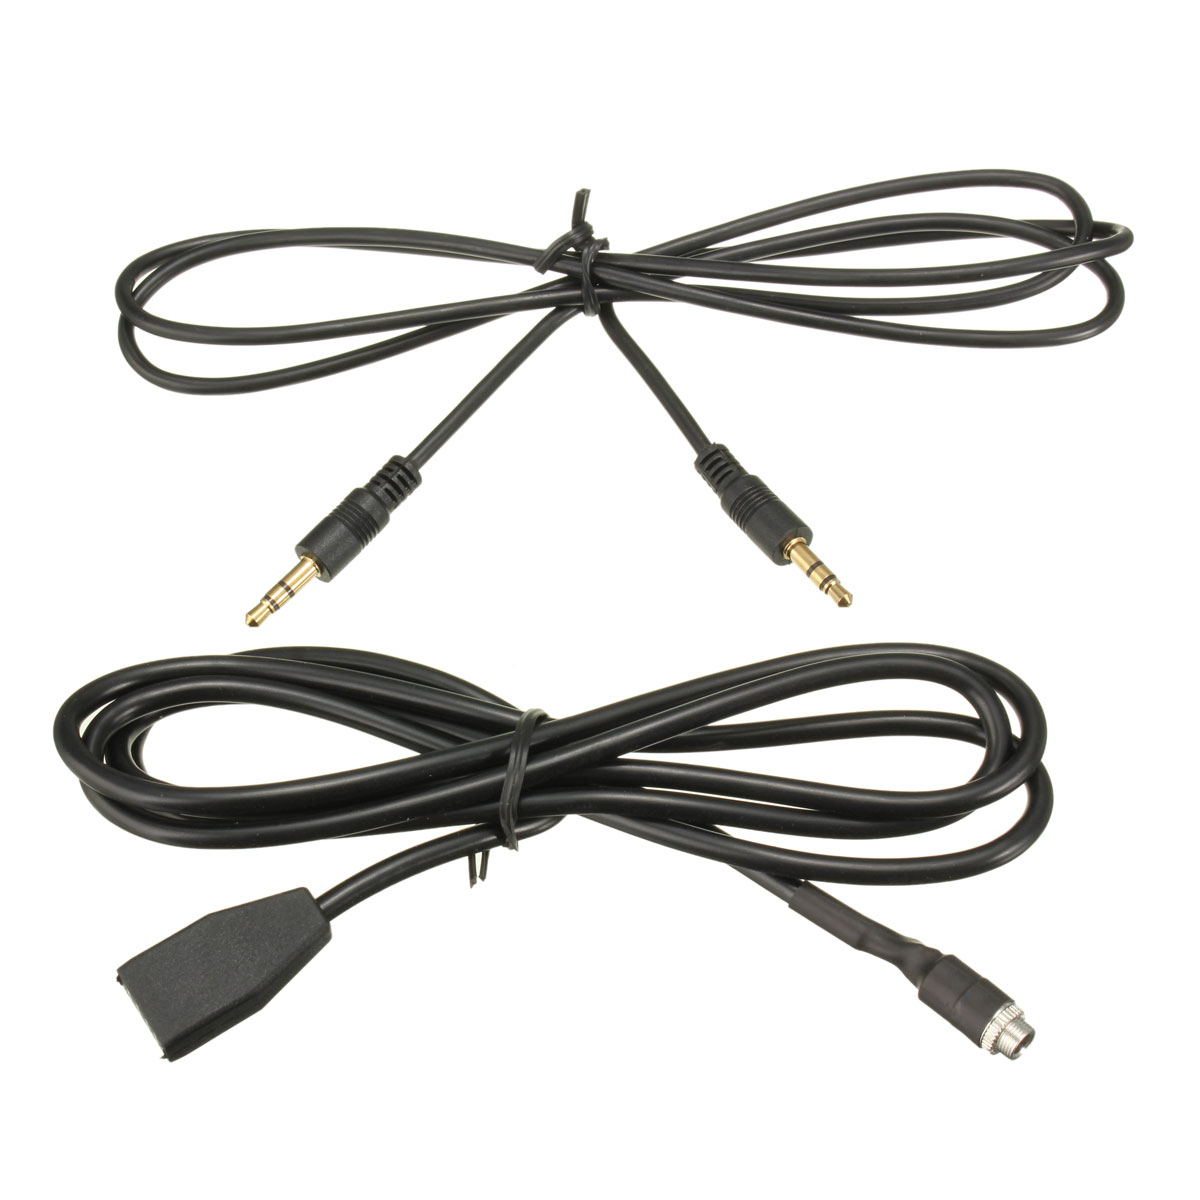 

AUX IN Входной кабель Адаптер Lead MP3 3.5mm FemalE-mountable Разъем Для BMW E46